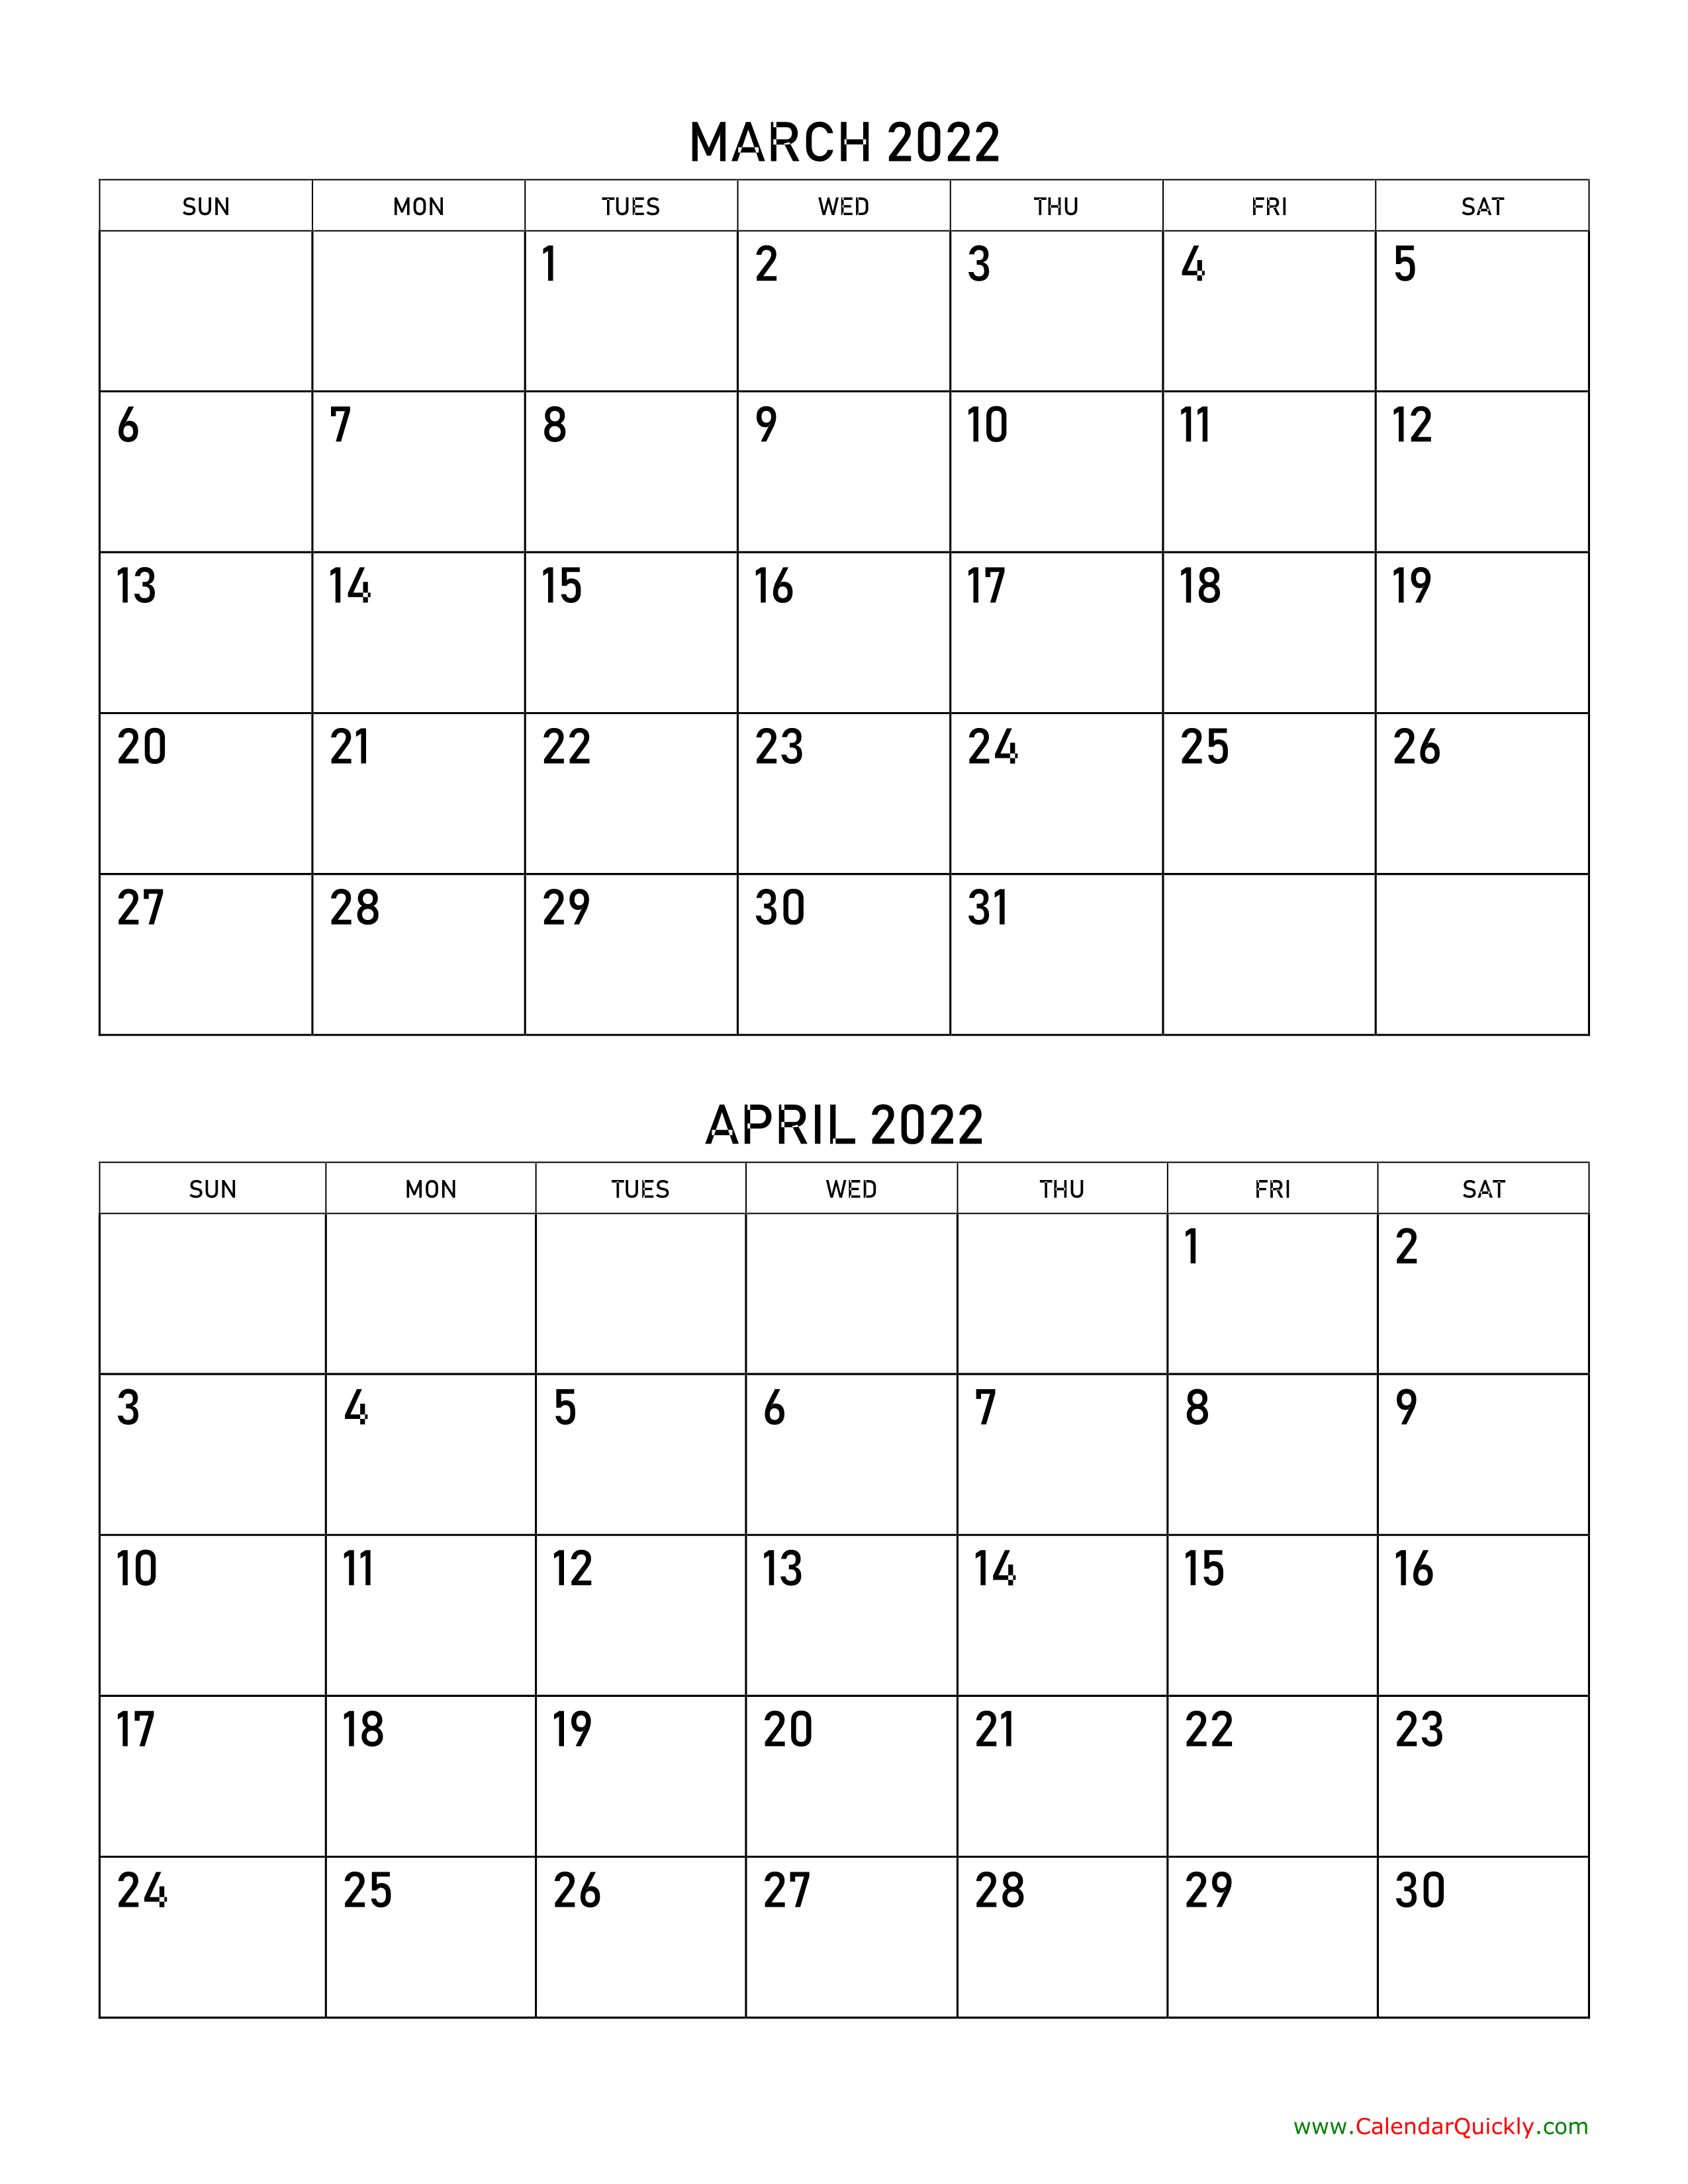 March and April 2022 Calendar Calendar Quickly